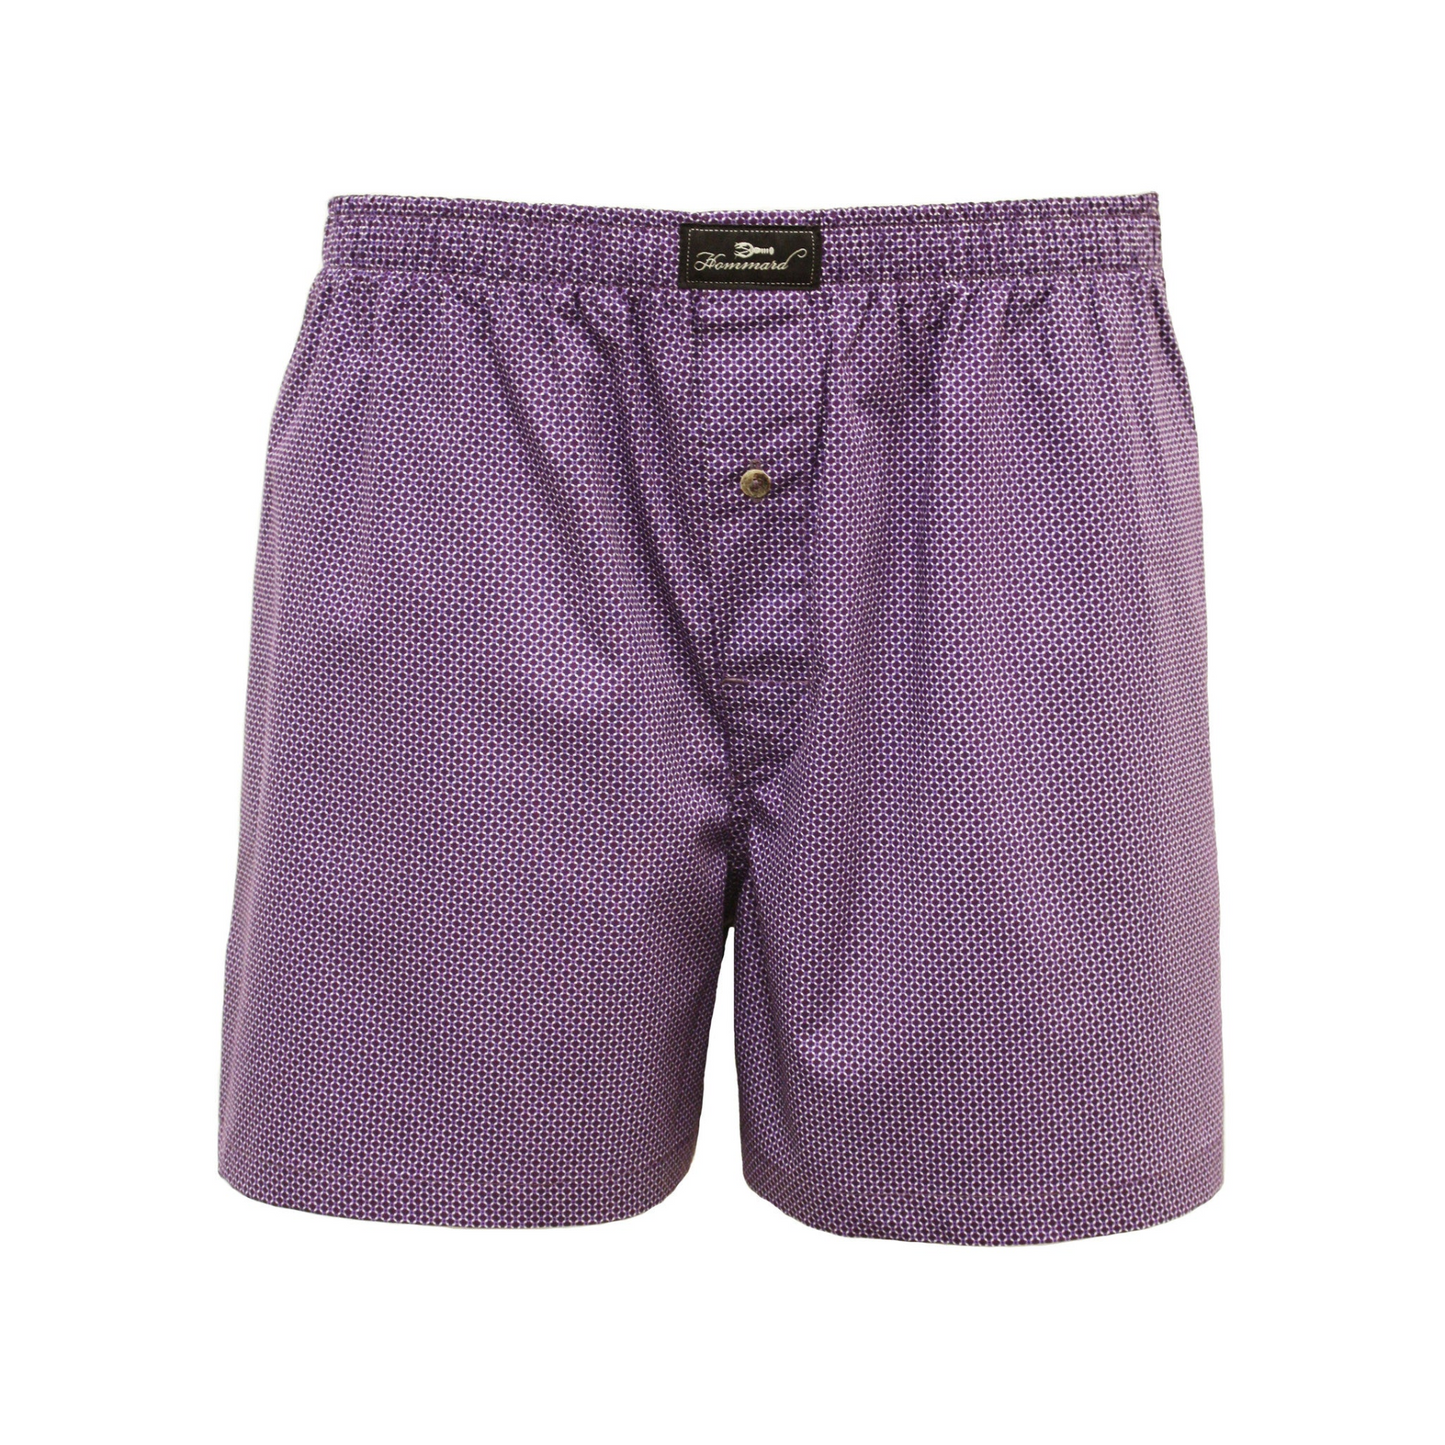 Woven Cotton Boxer Shorts Dark Purple Dot